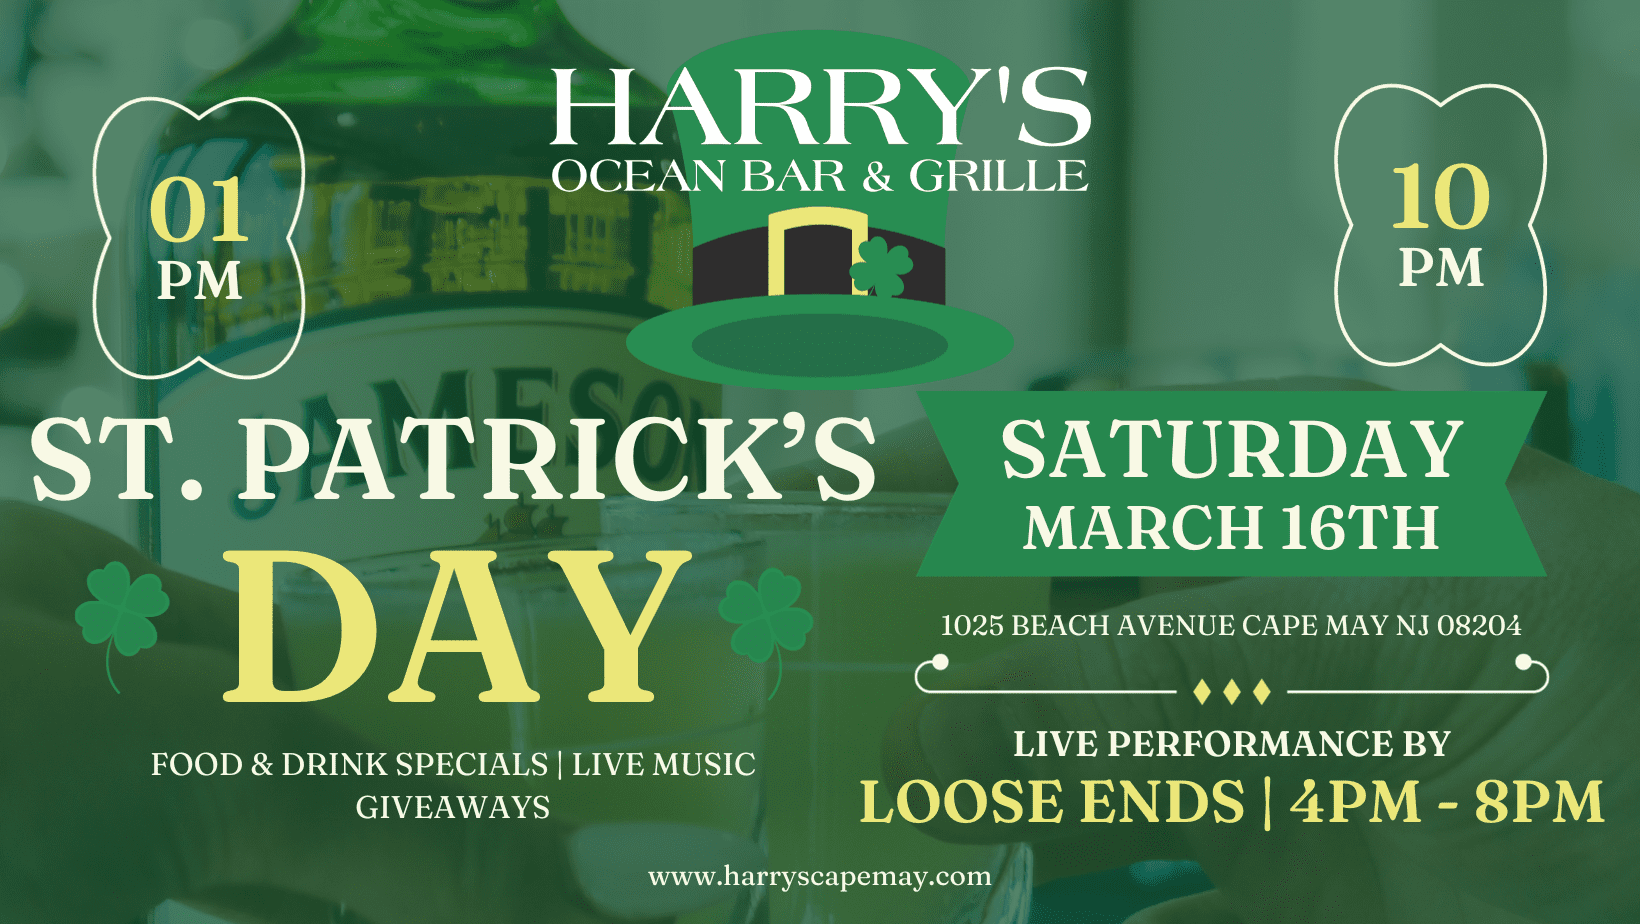 Celebrate St. Patrick’s Day at Harry’s